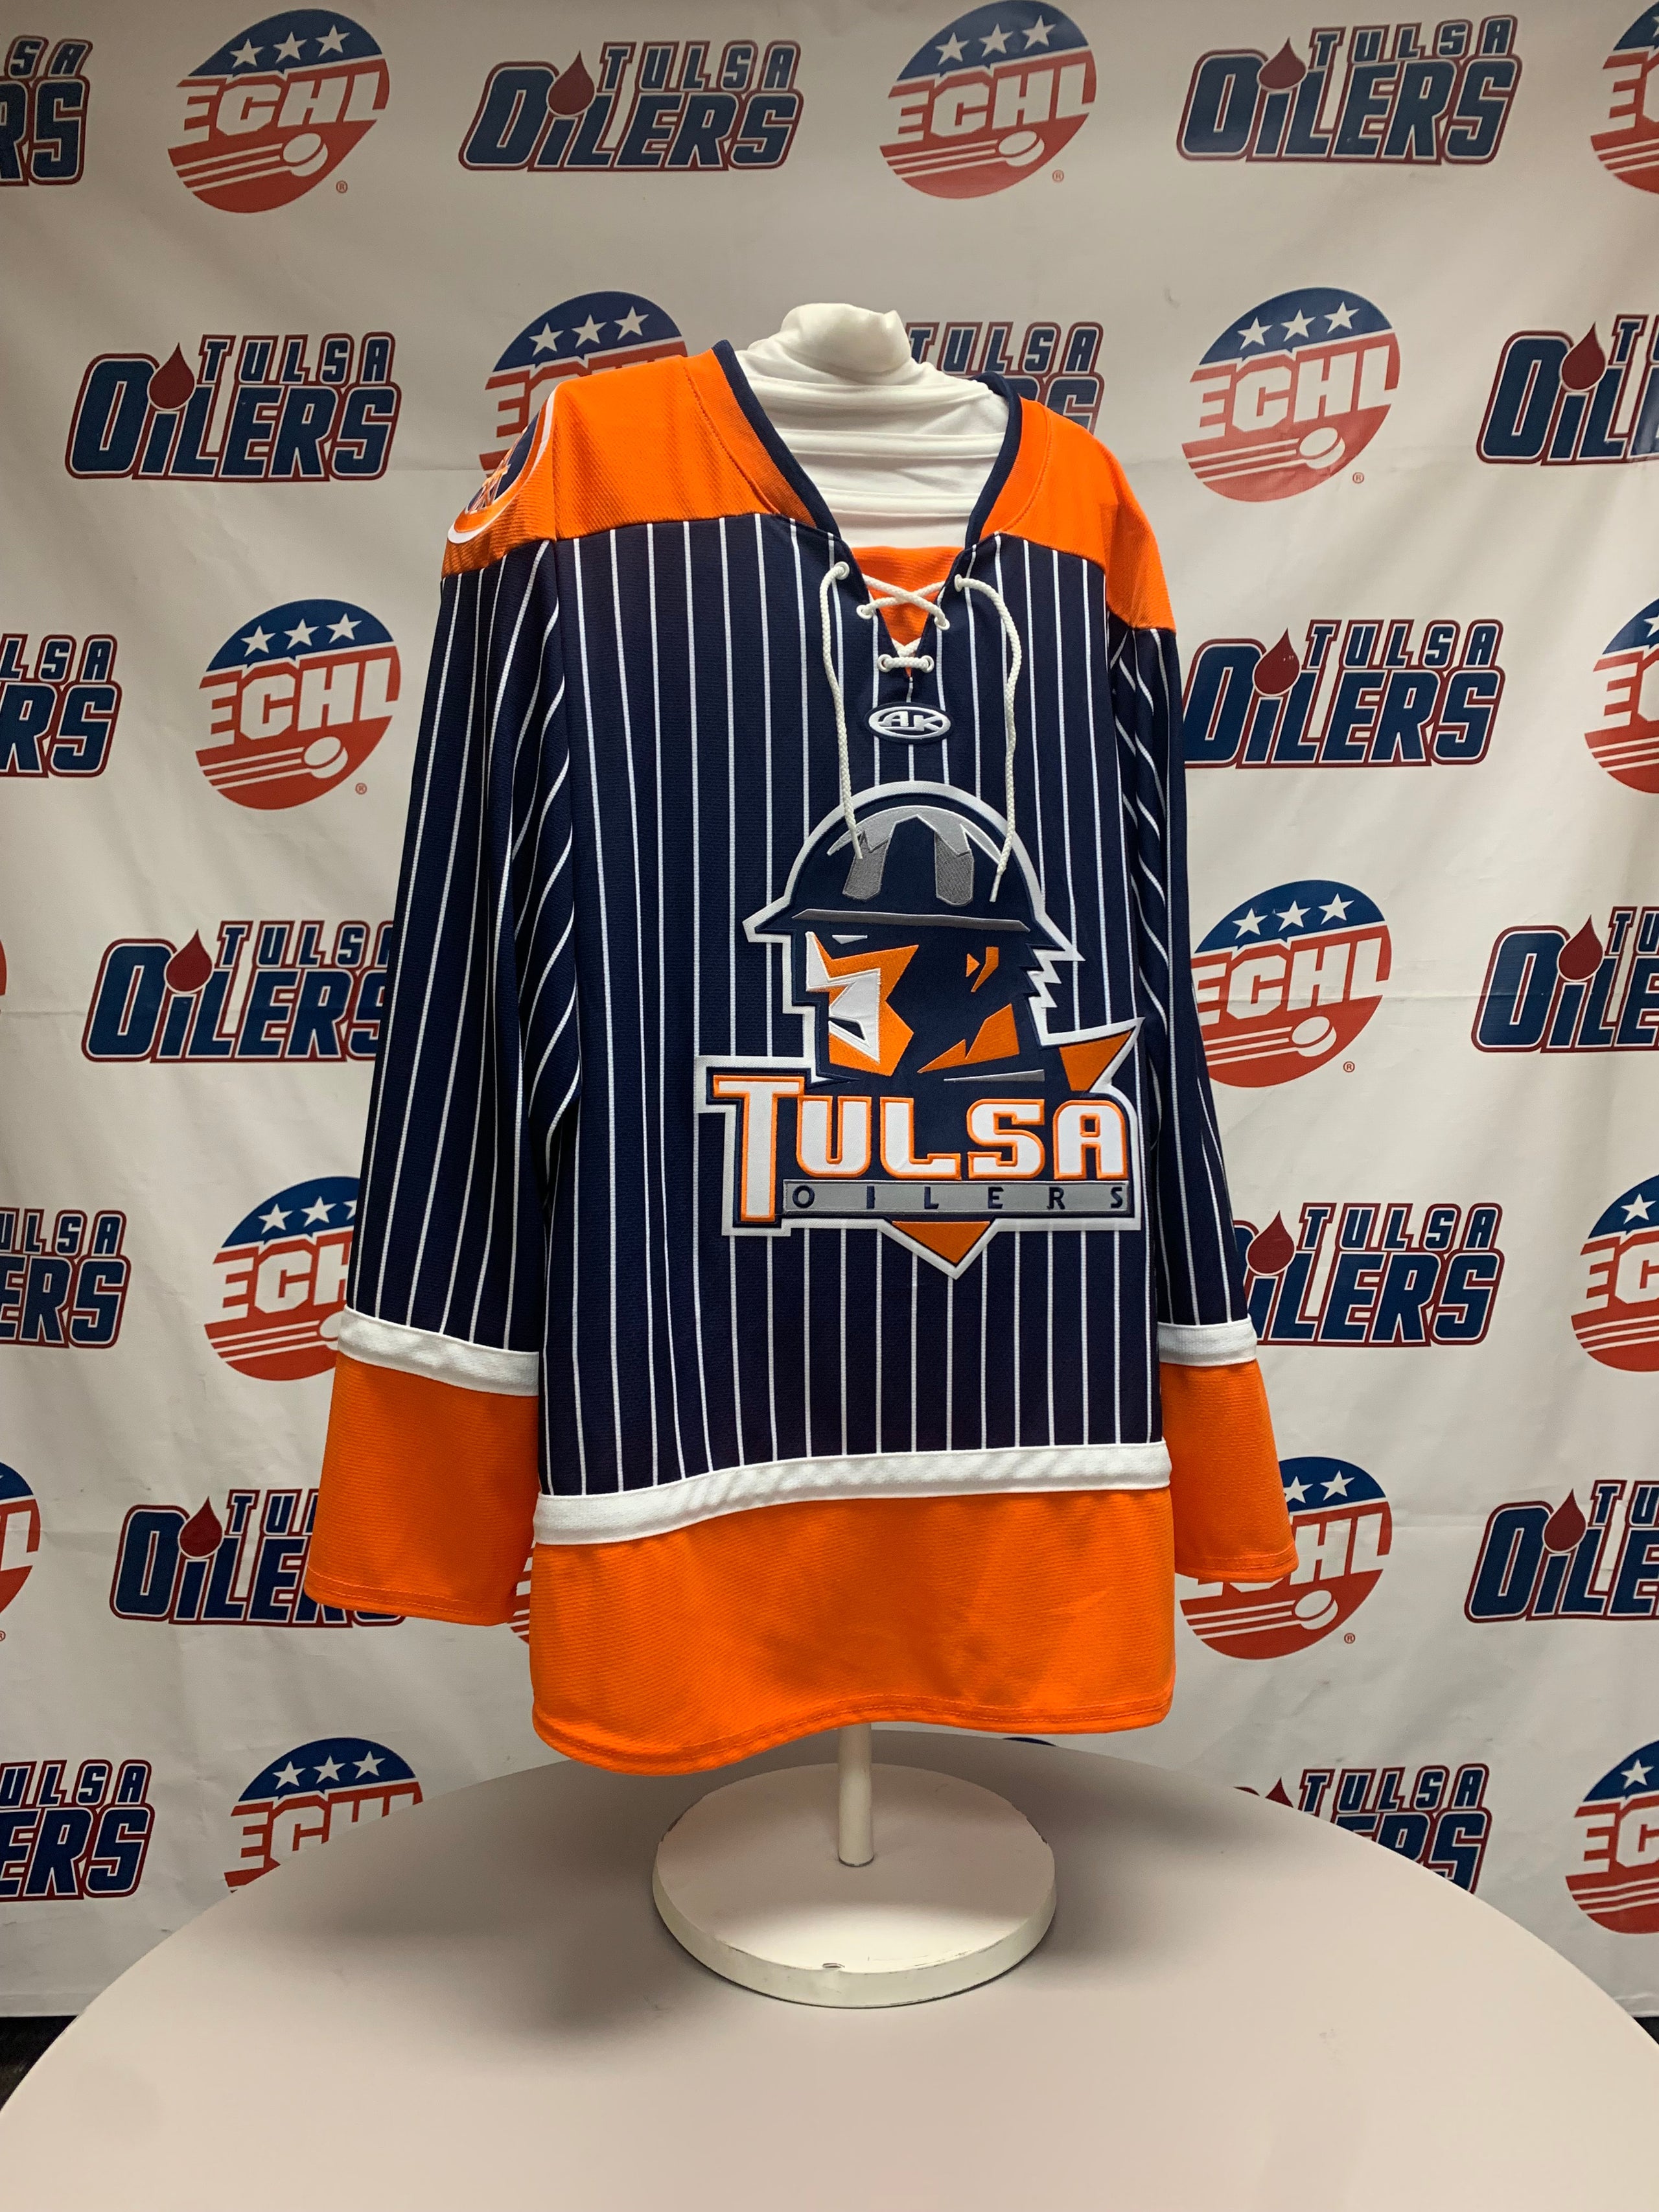 Game Worn Tulsa Oilers Jersey